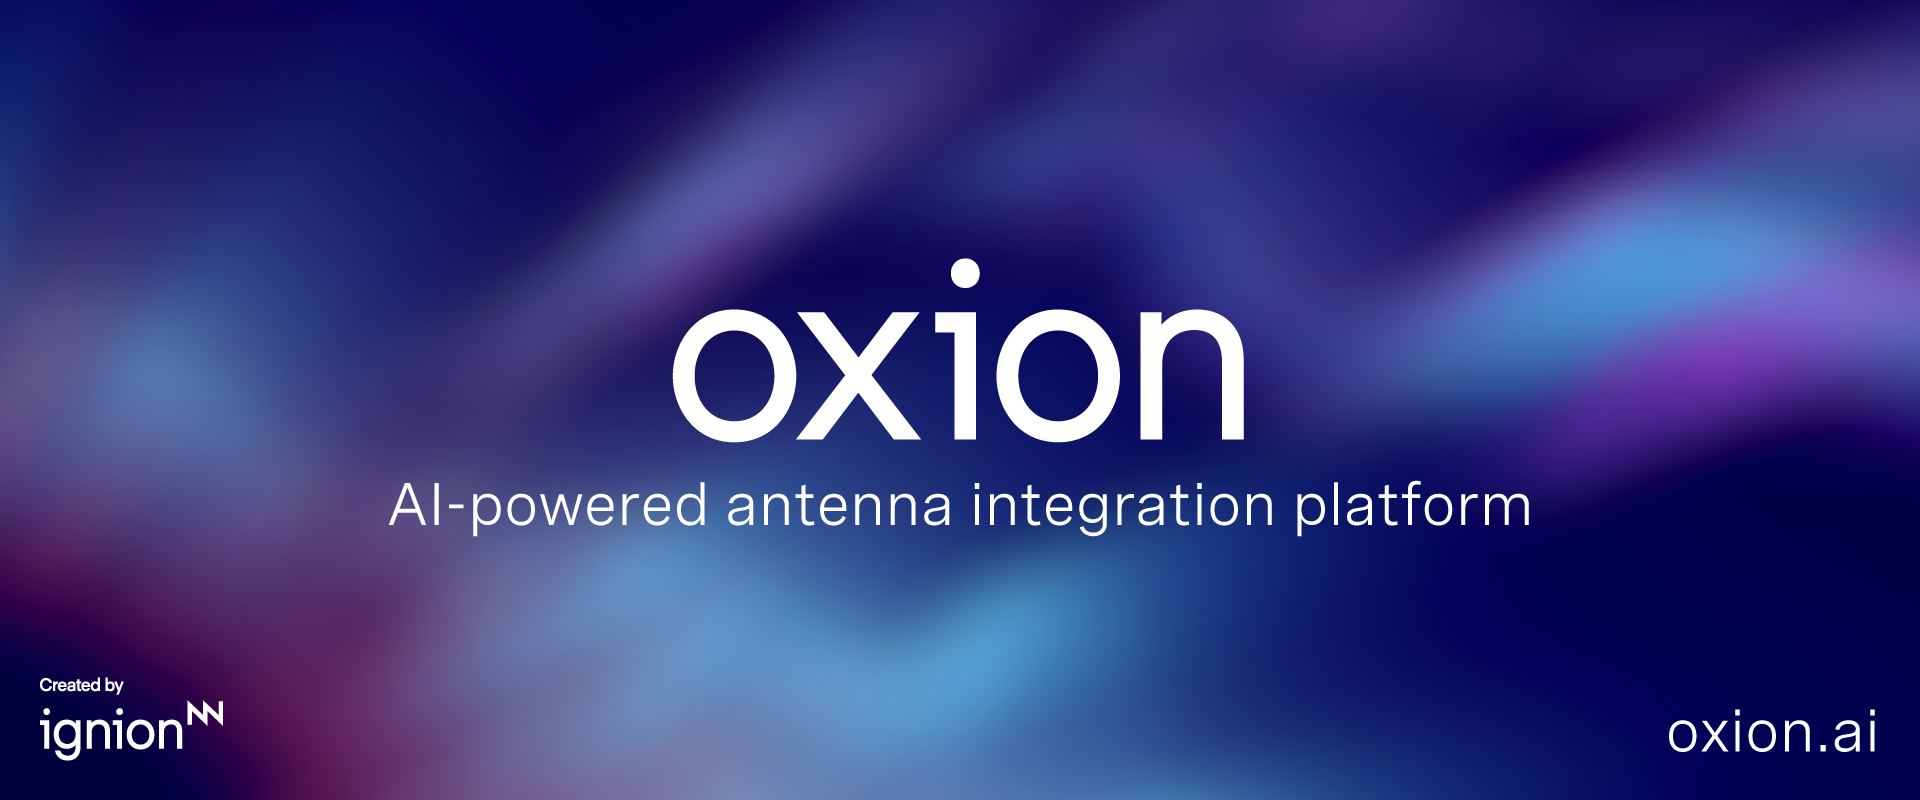 Ignion launches revolutionary AI-powered antenna integration platform